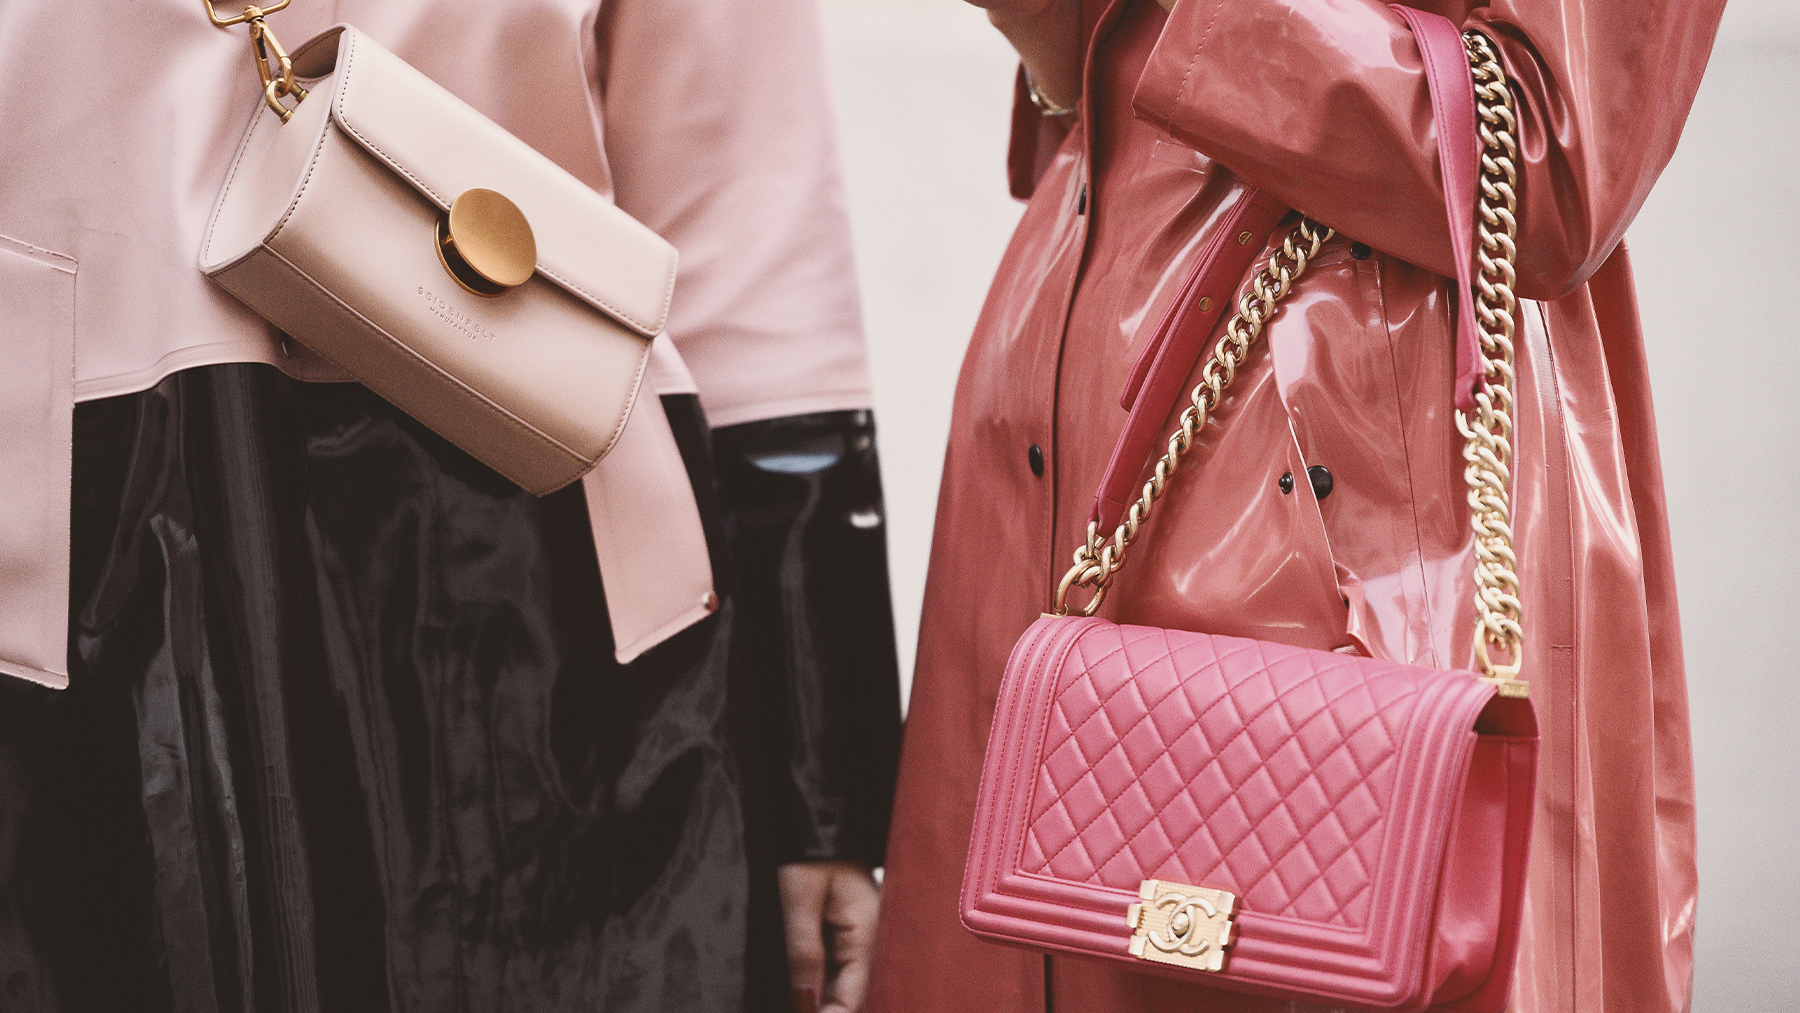 Hong Kong style light luxury fashion handbags, source factory